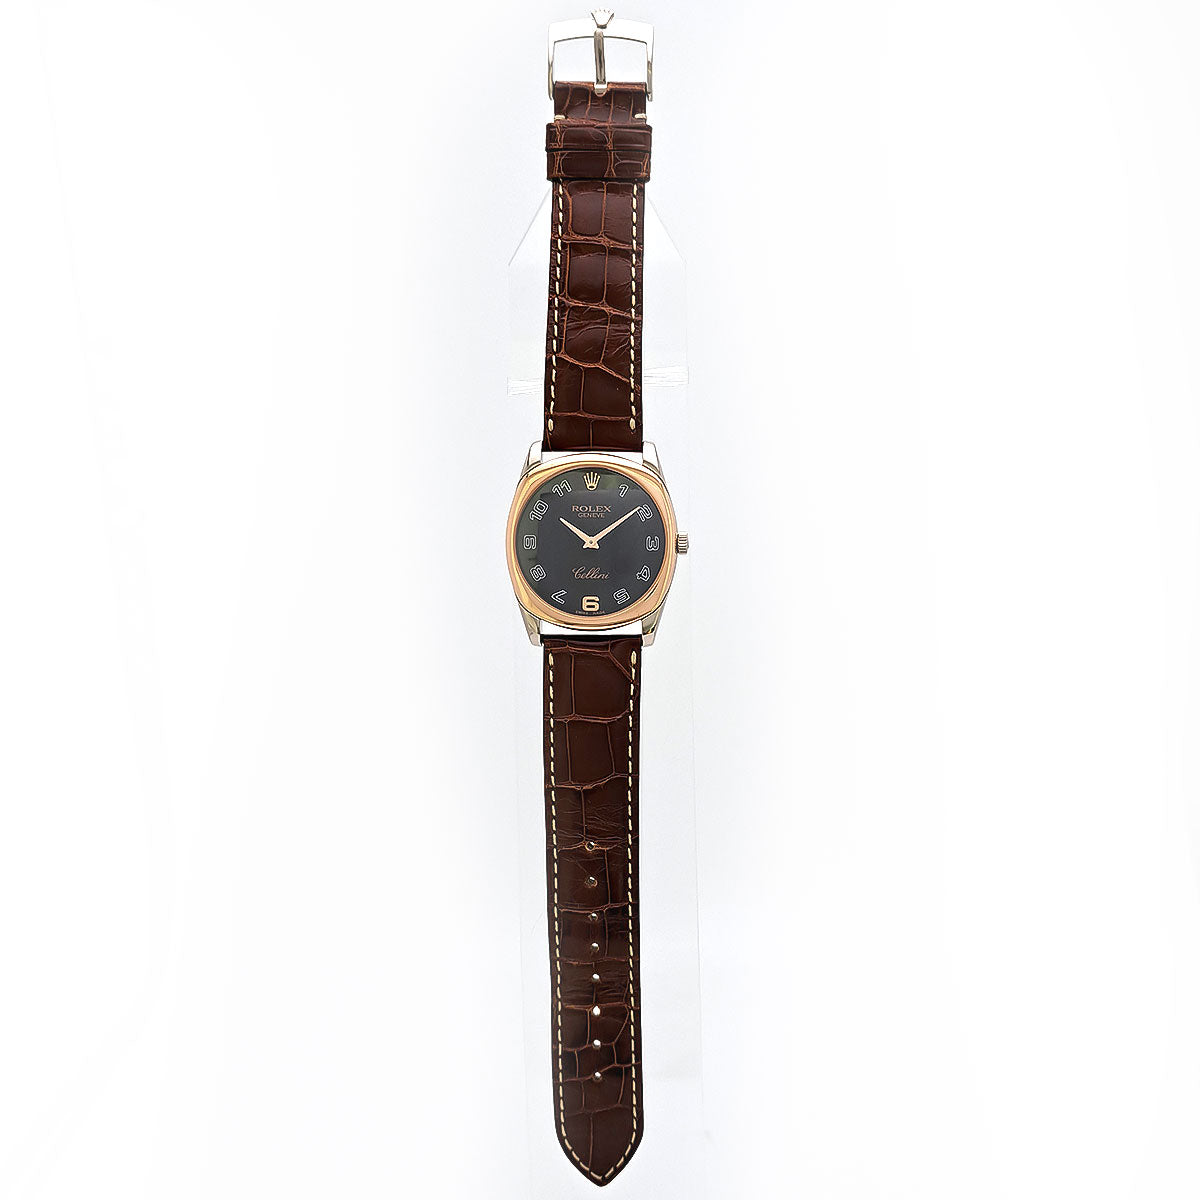 Manual Cellini Wrist Watch 4233